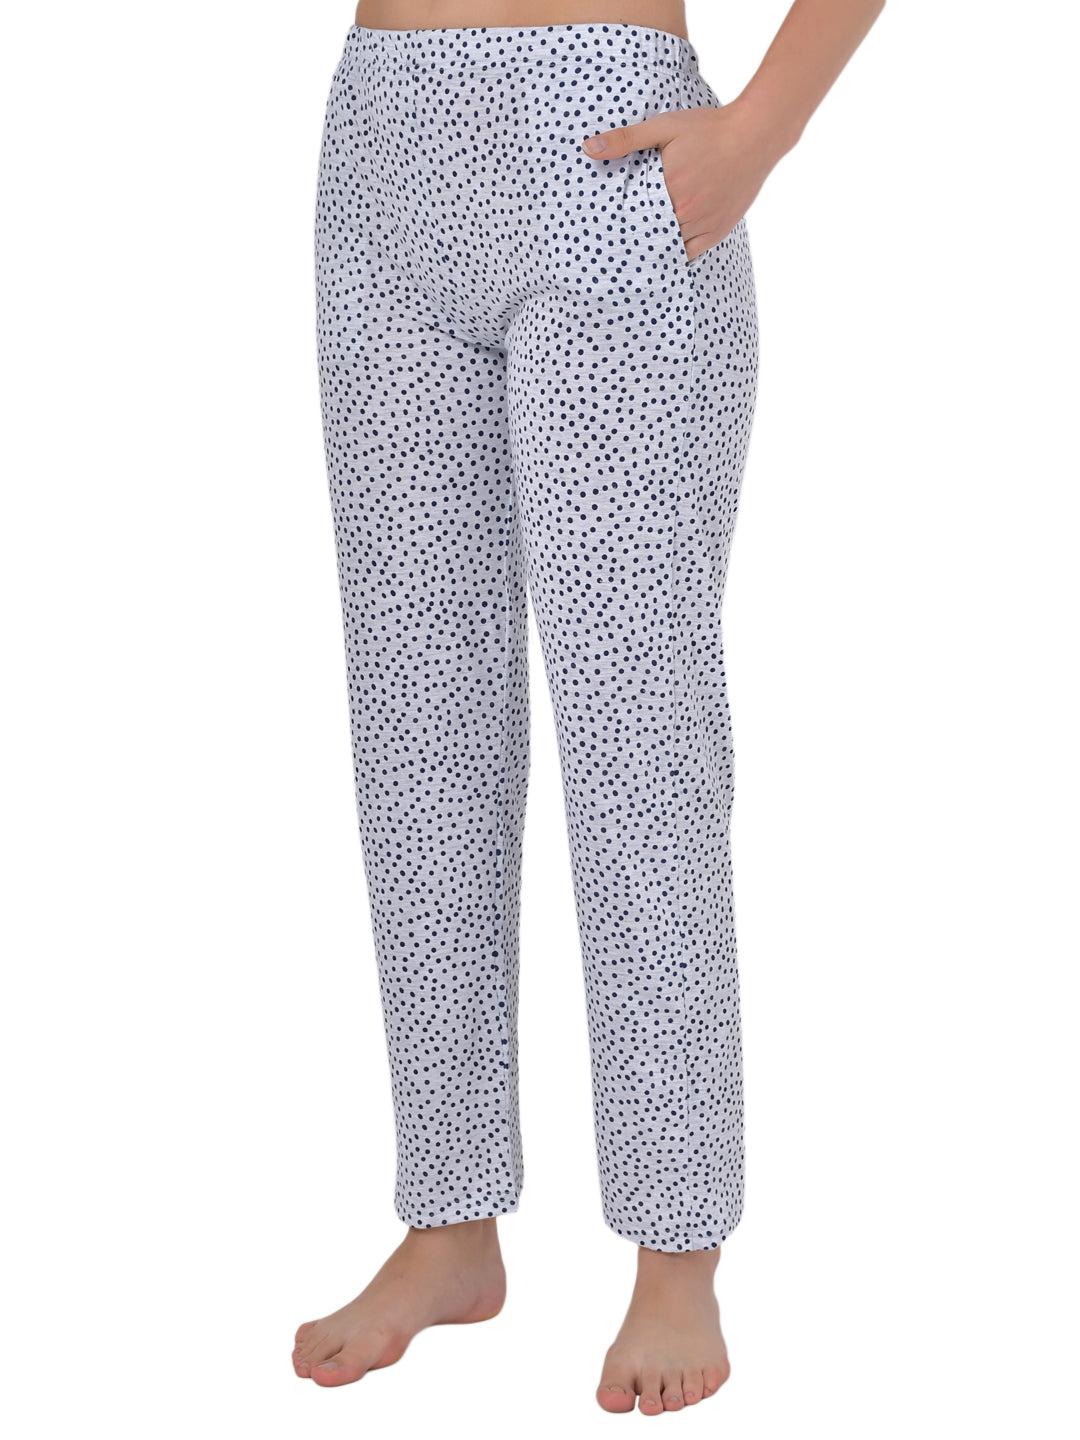 Klamotten Women's Blue Grey Graphic Printed Top and Allover Printed Pyjama Set N108N